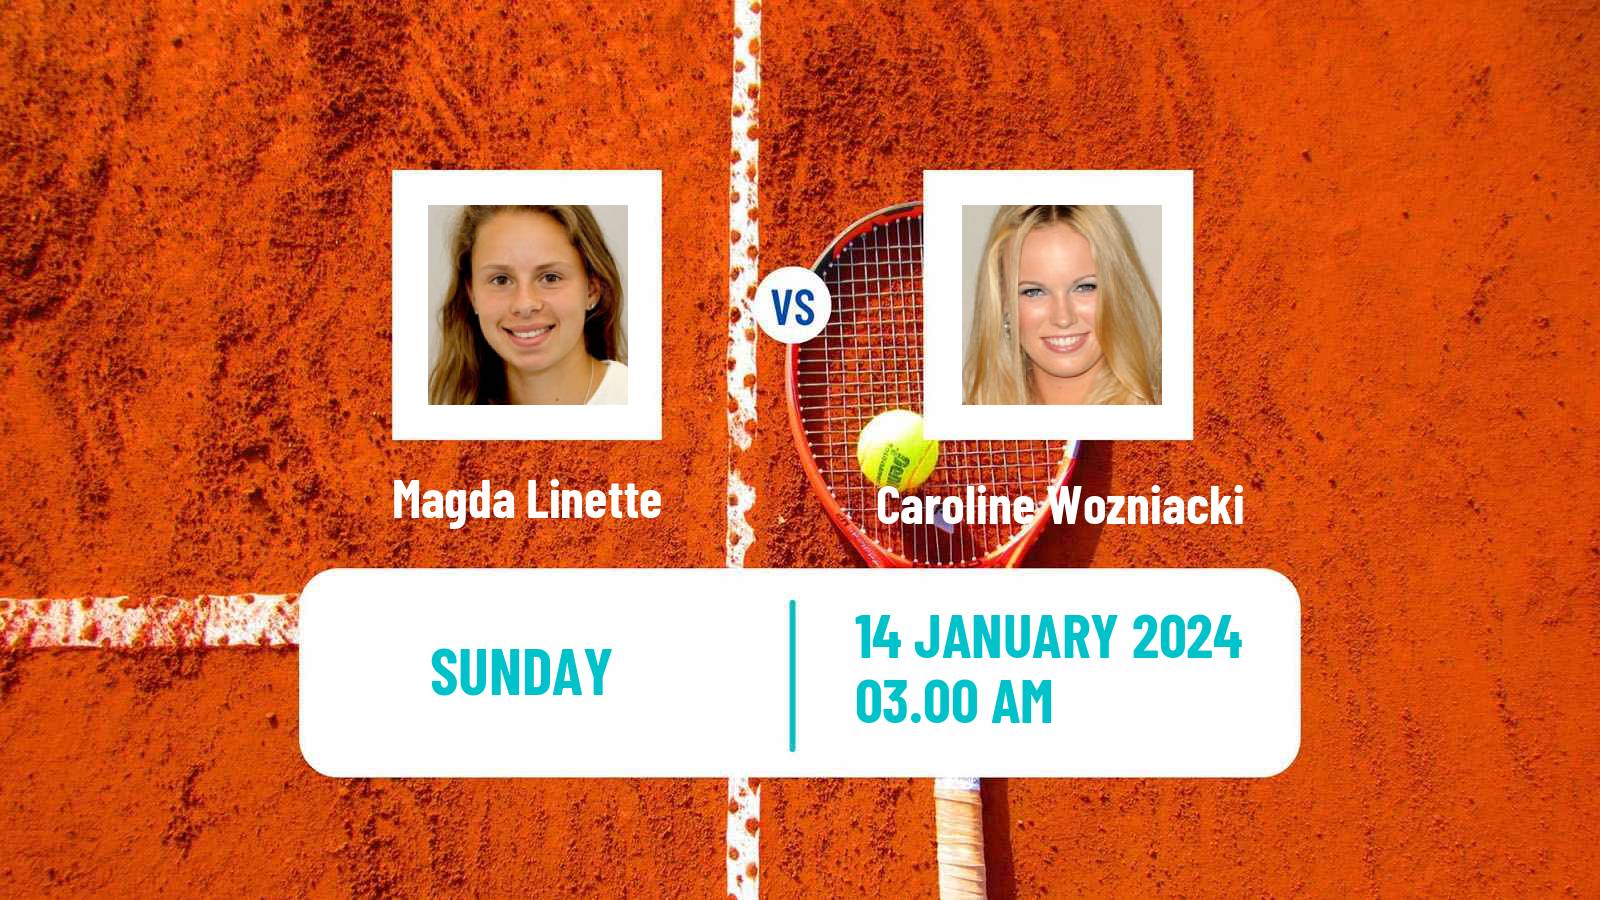 Tennis WTA Australian Open Magda Linette - Caroline Wozniacki